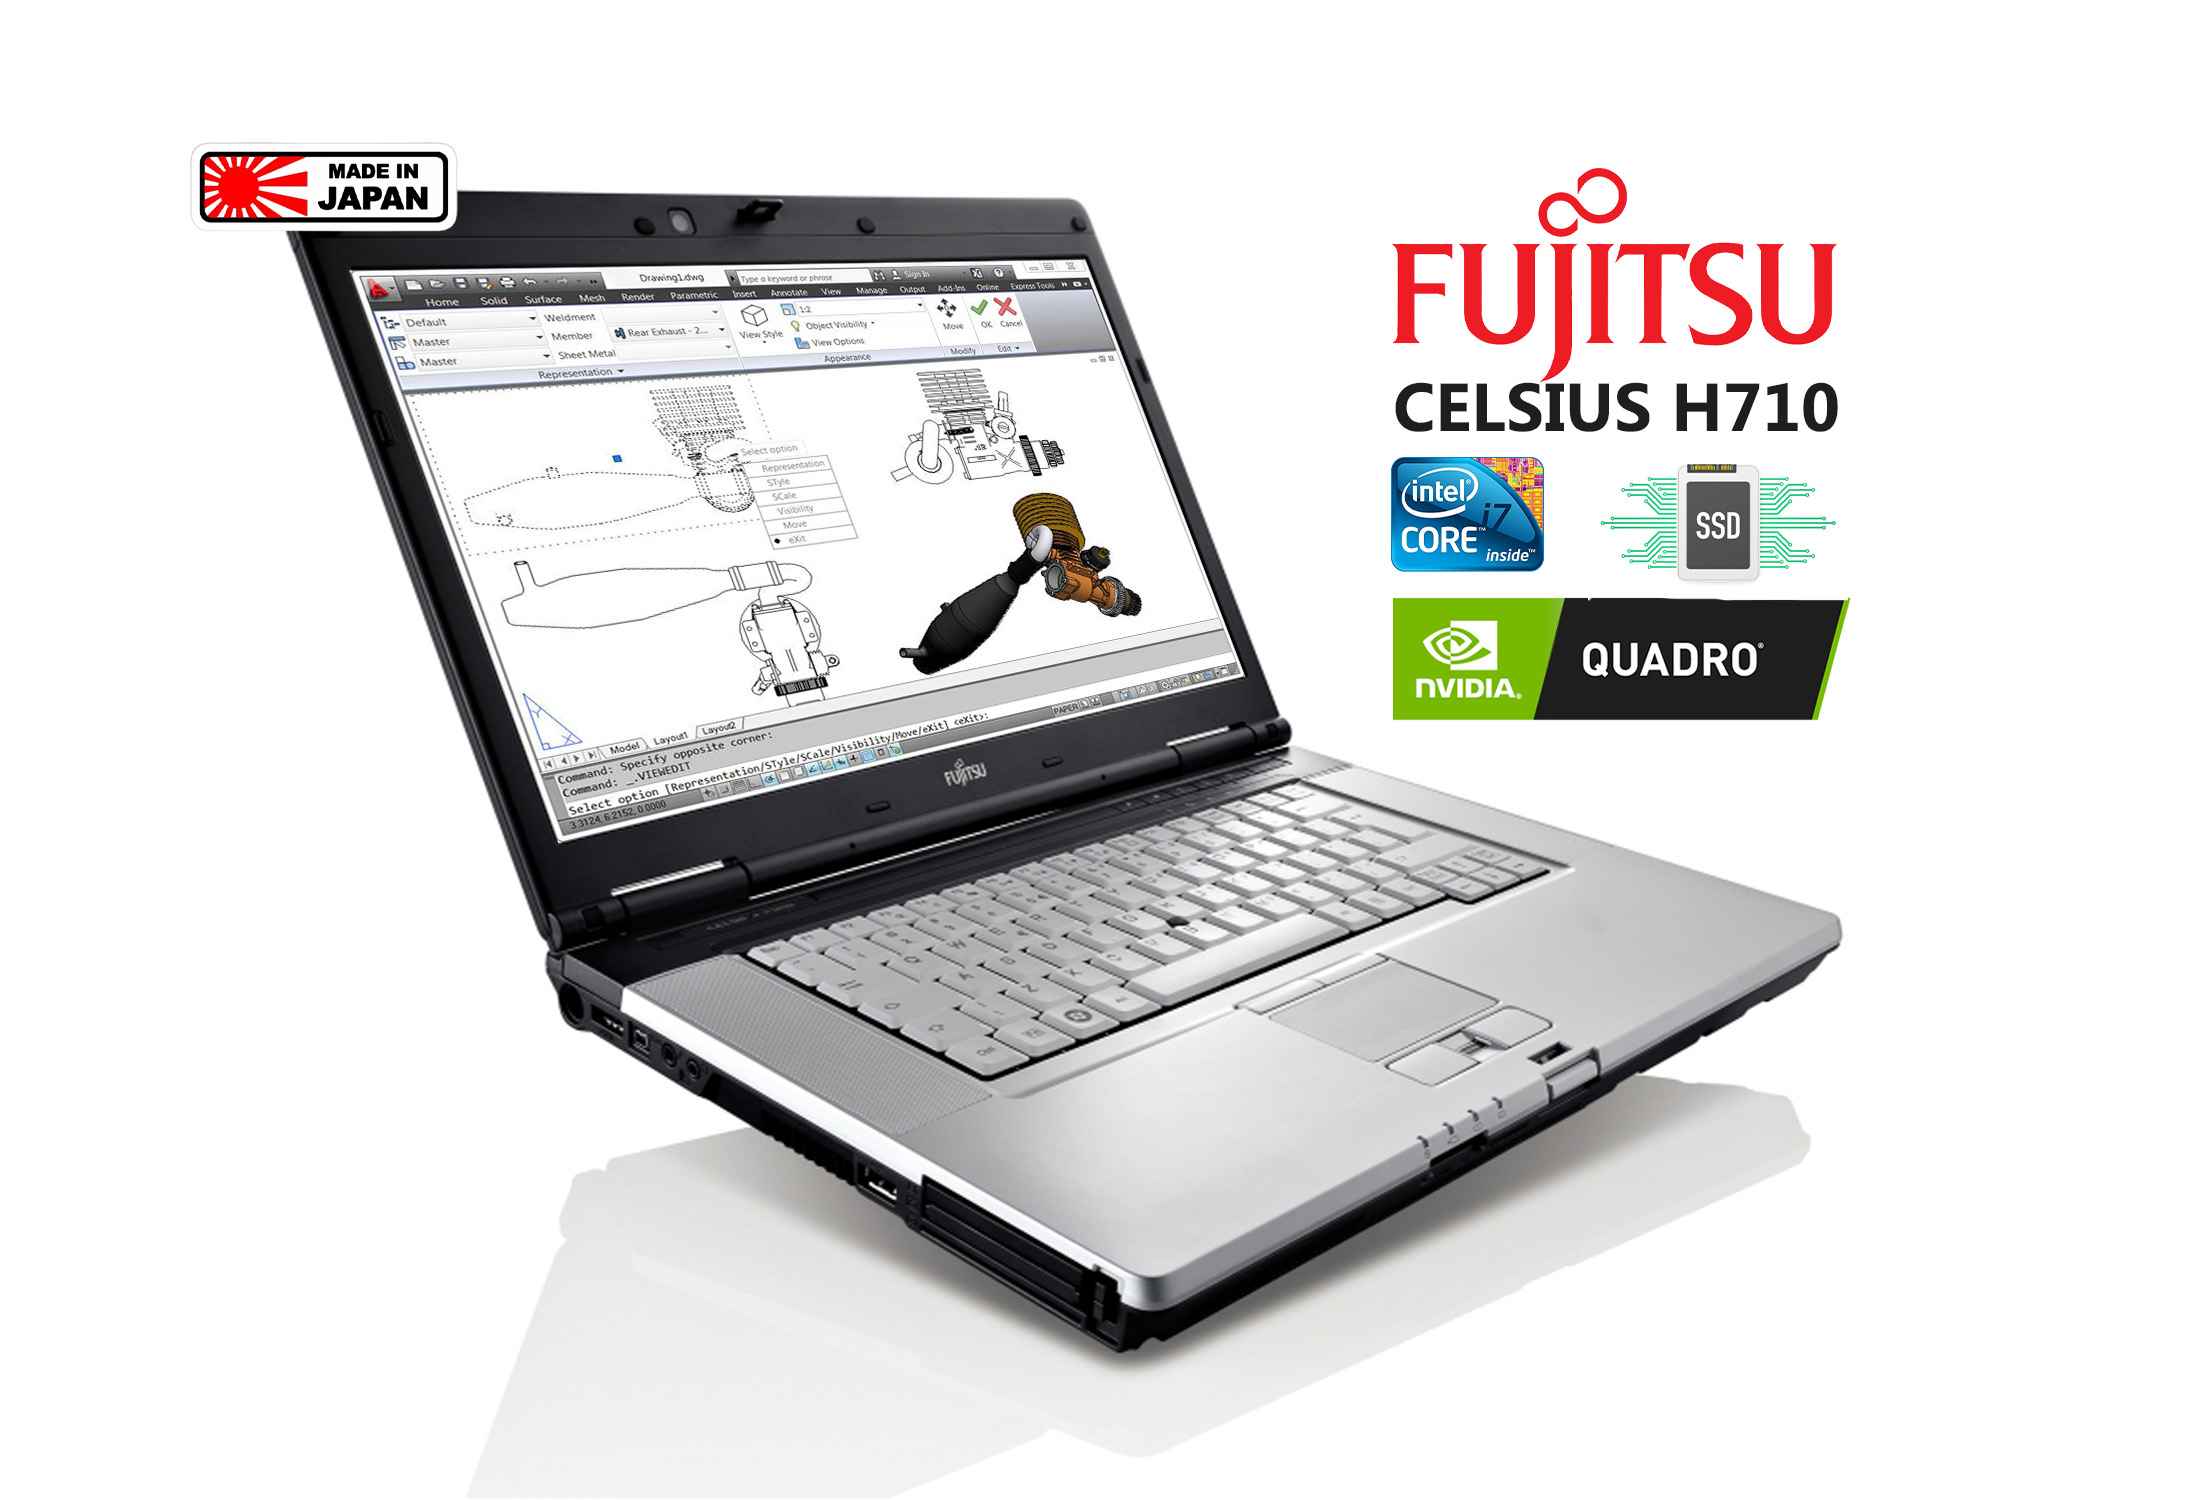 Fujitsu Celsius H710 i7-2640M 256GB SSD Quadro 1000M Camera